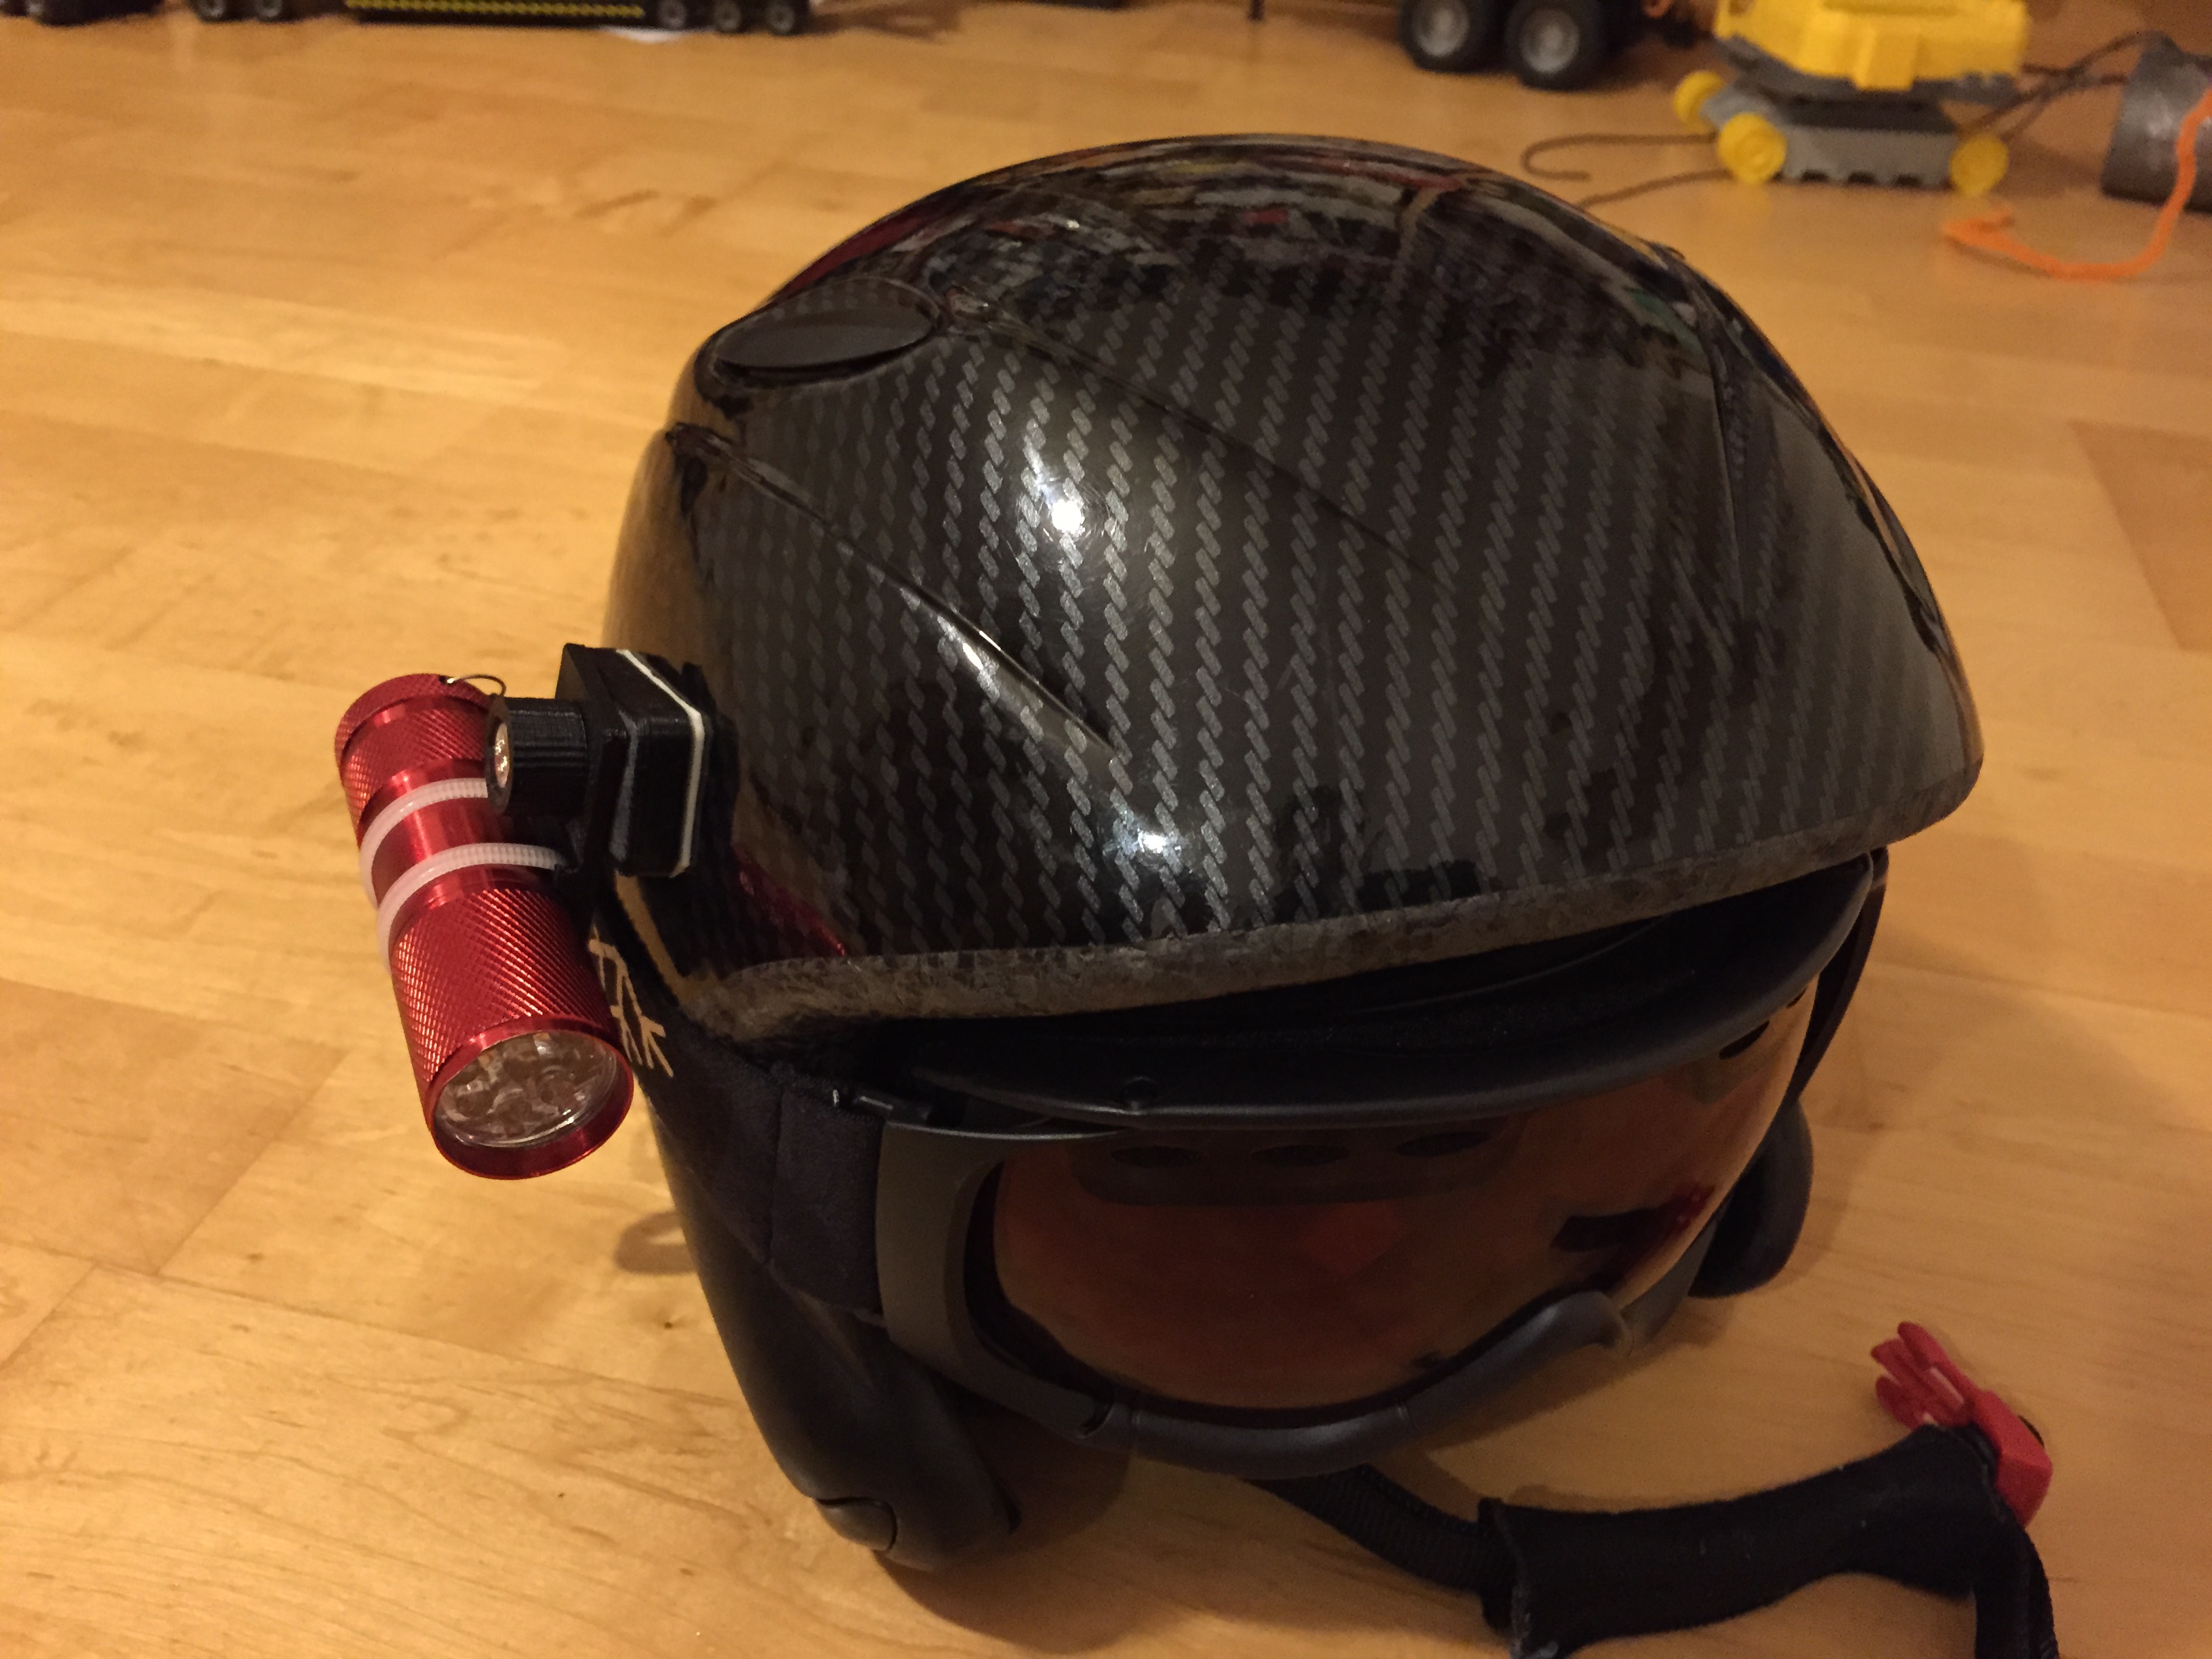 Simple helmet torch mount